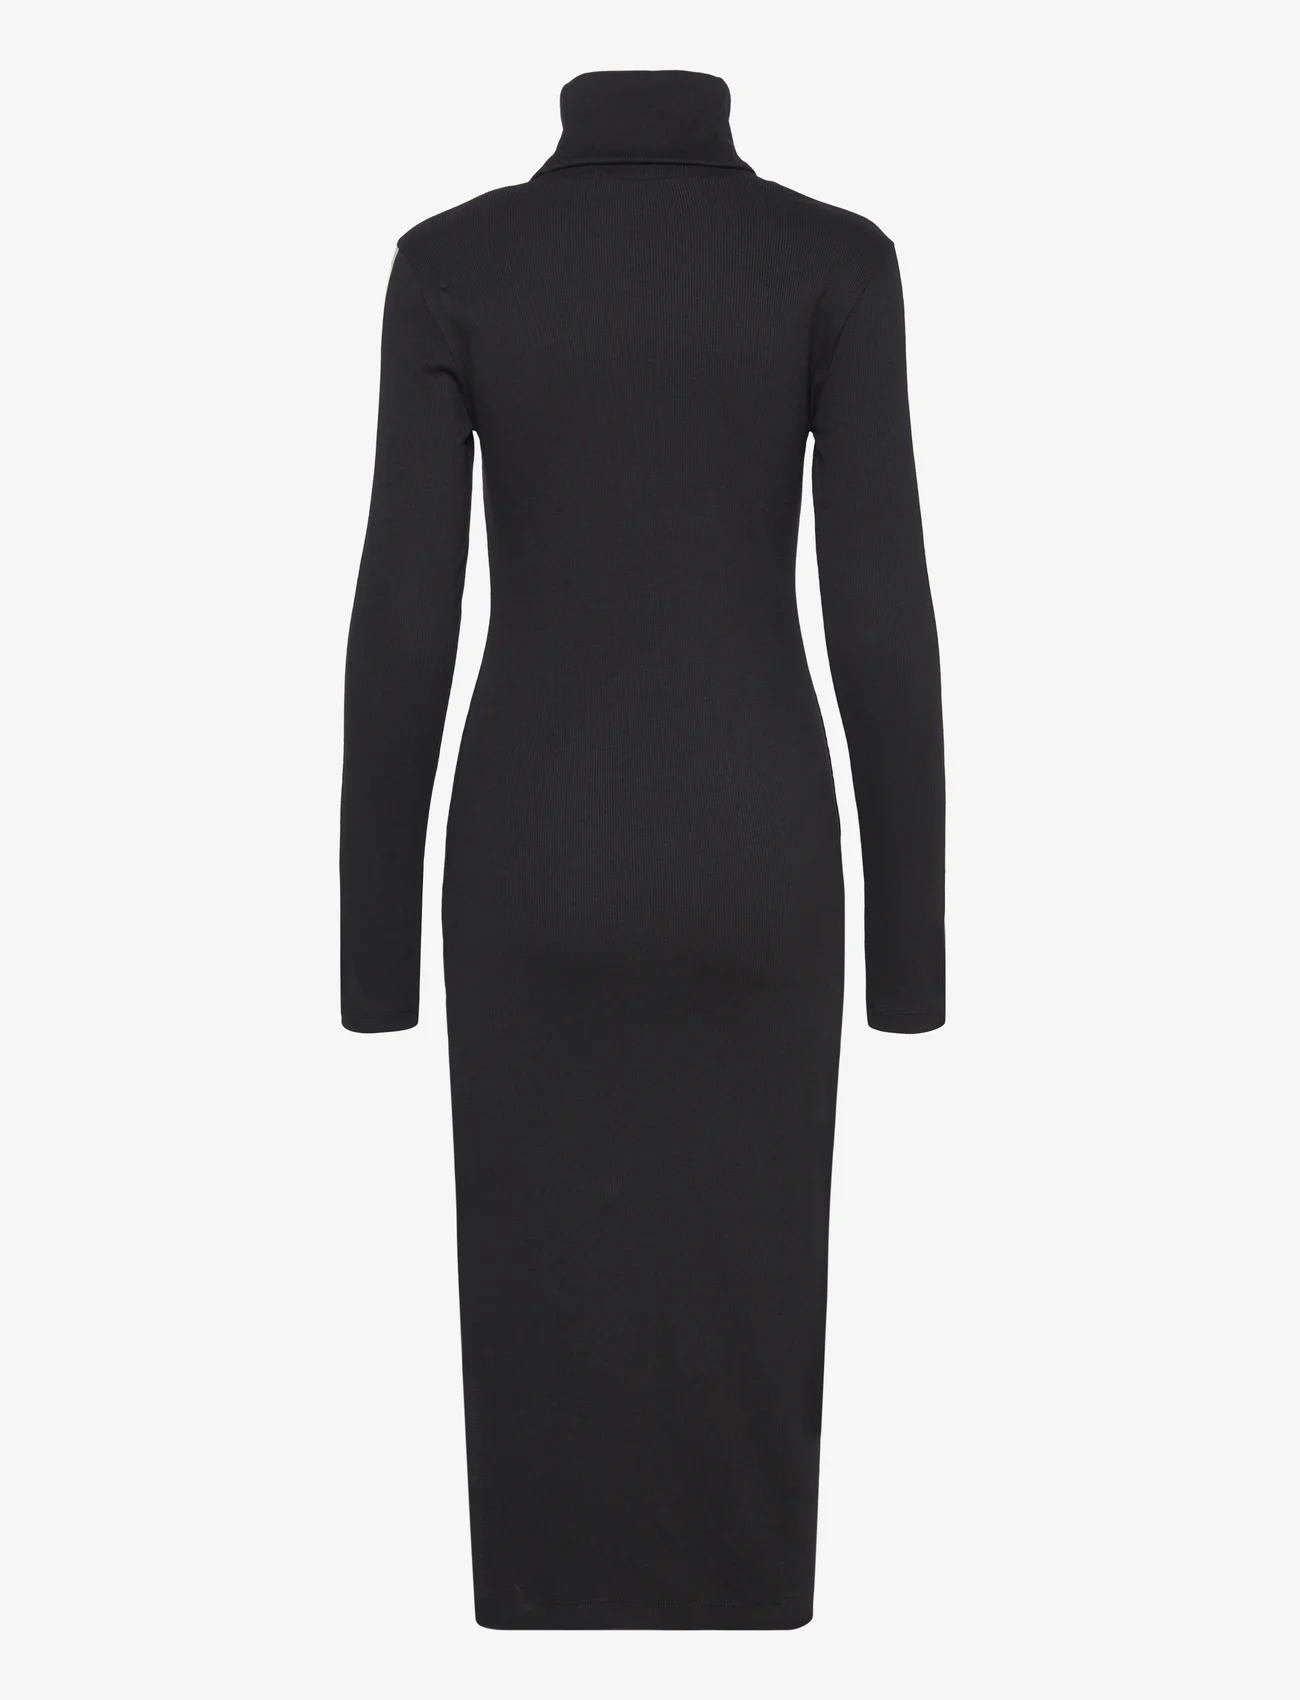 Calvin Klein Jeans - LOGO ELASTIC RIB LONG DRESS - sukienki dopasowane - ck black - 1